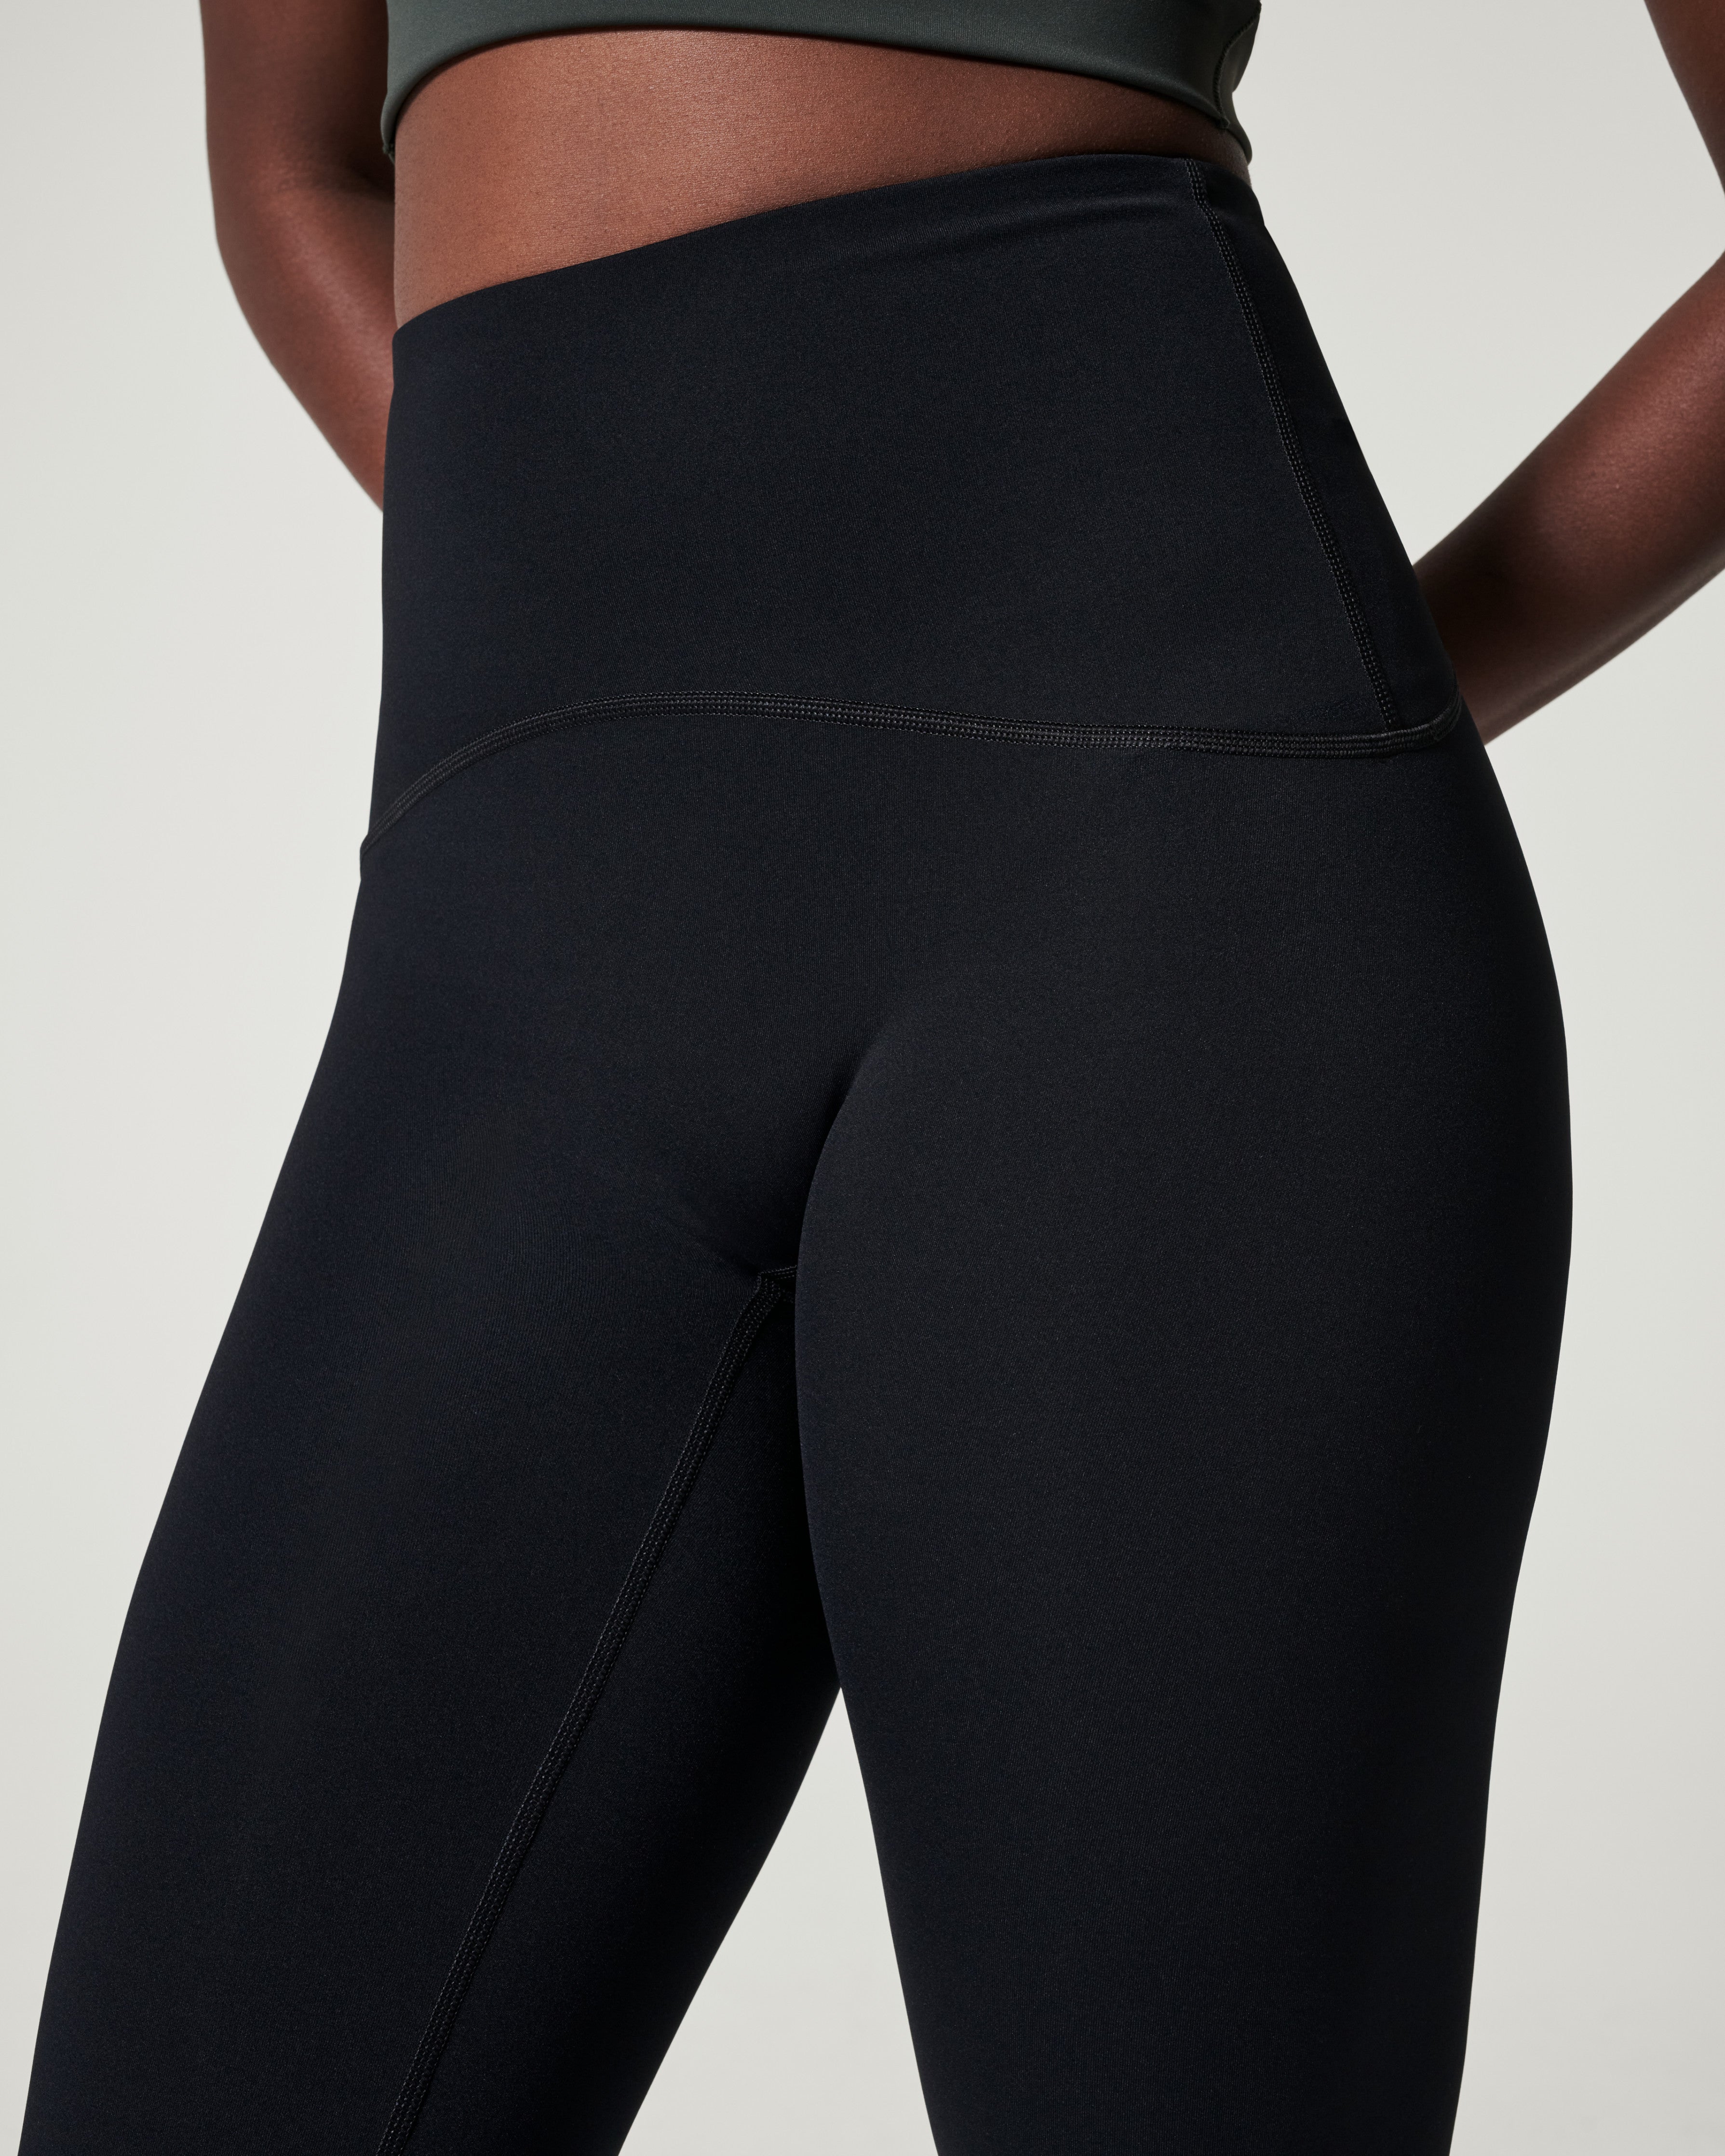 HISKYWIN Inner Pocket Yoga Pants 4 Way Stretch Tummy Control Workout  Running Pants, Long Bootleg Flare Pants